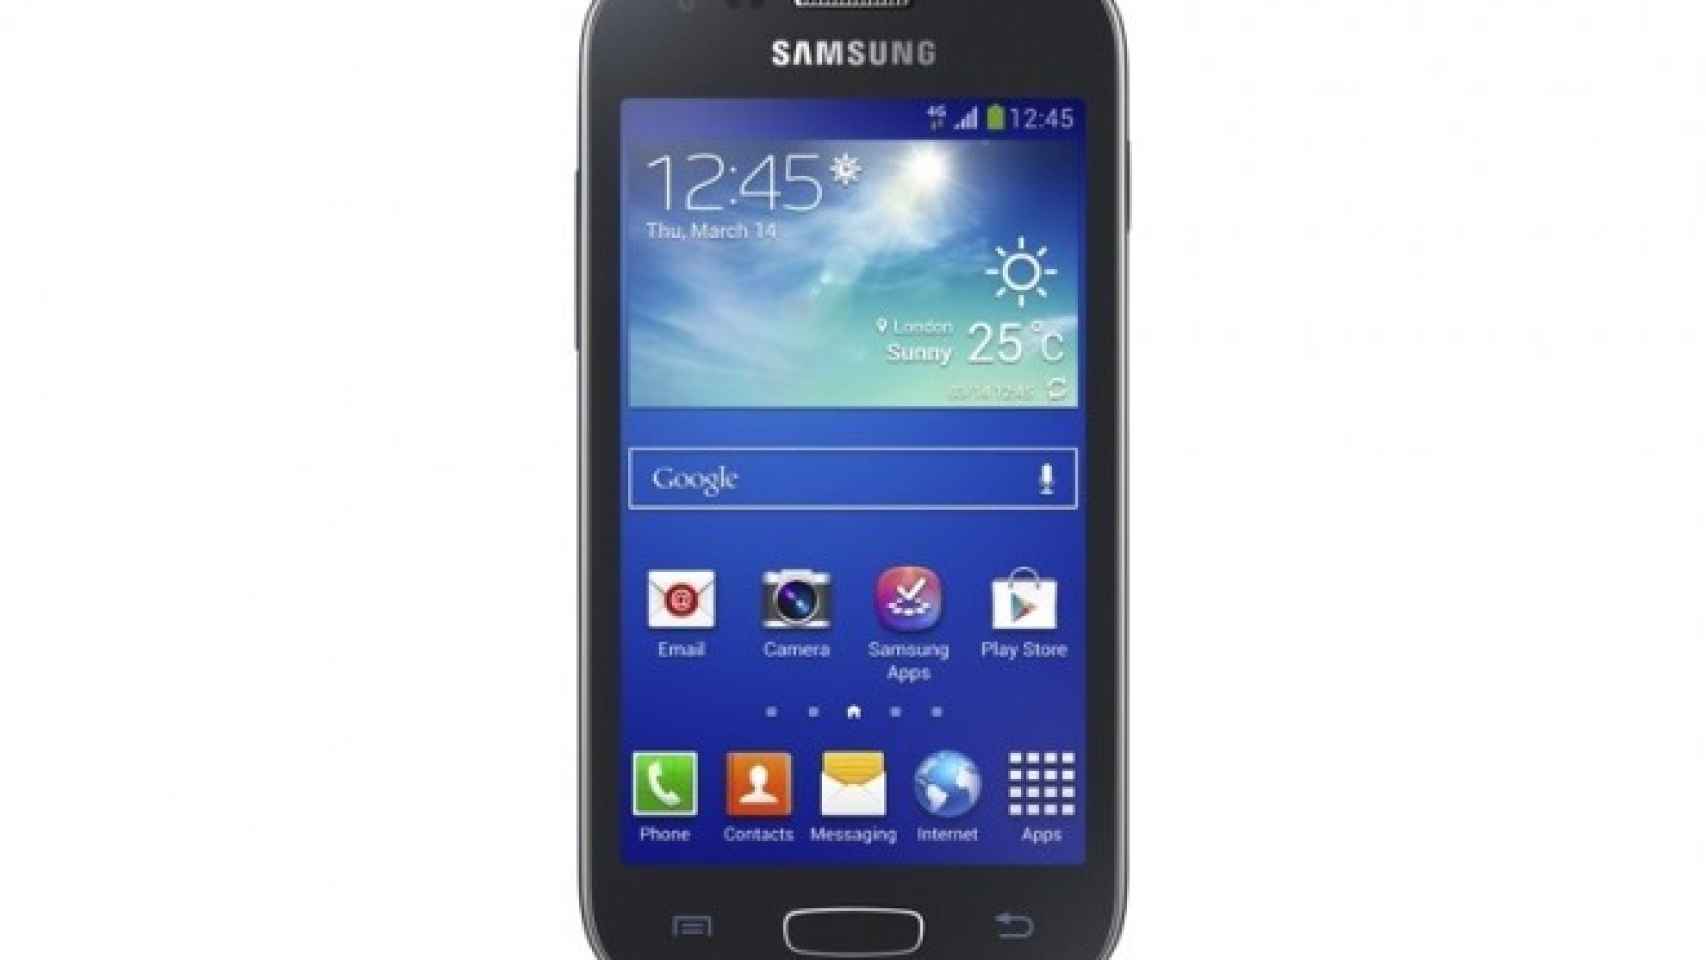 Samsung Galaxy Ace 3 presentado oficialmente